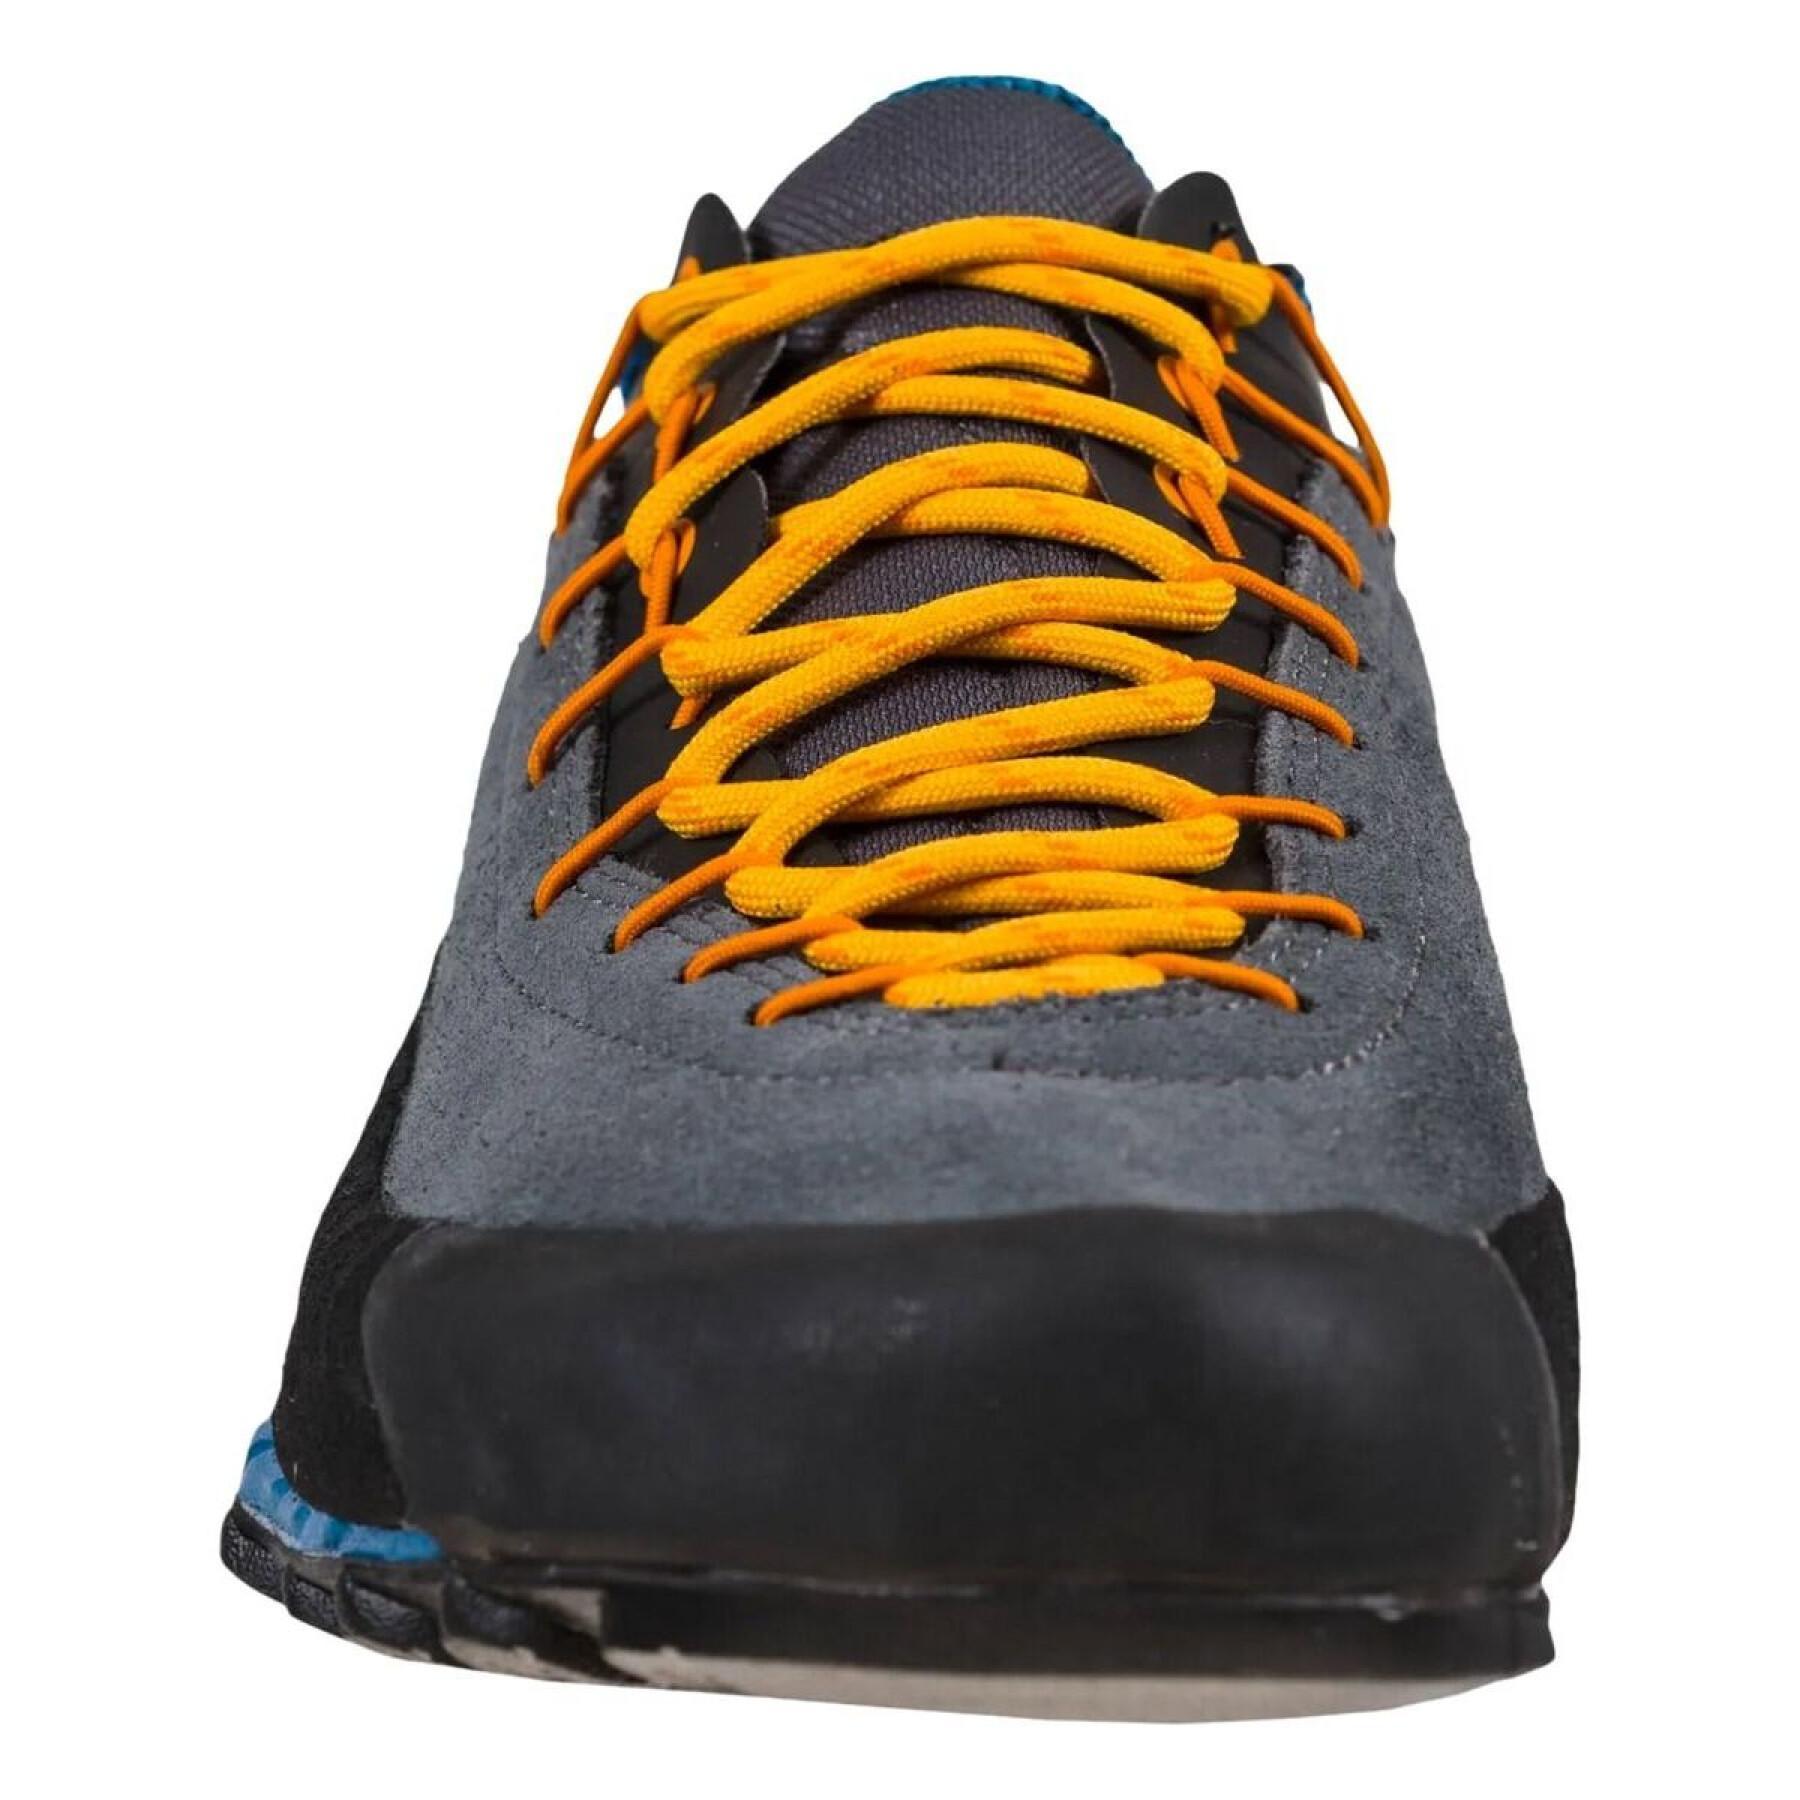 Hiking shoes La Sportiva TX4